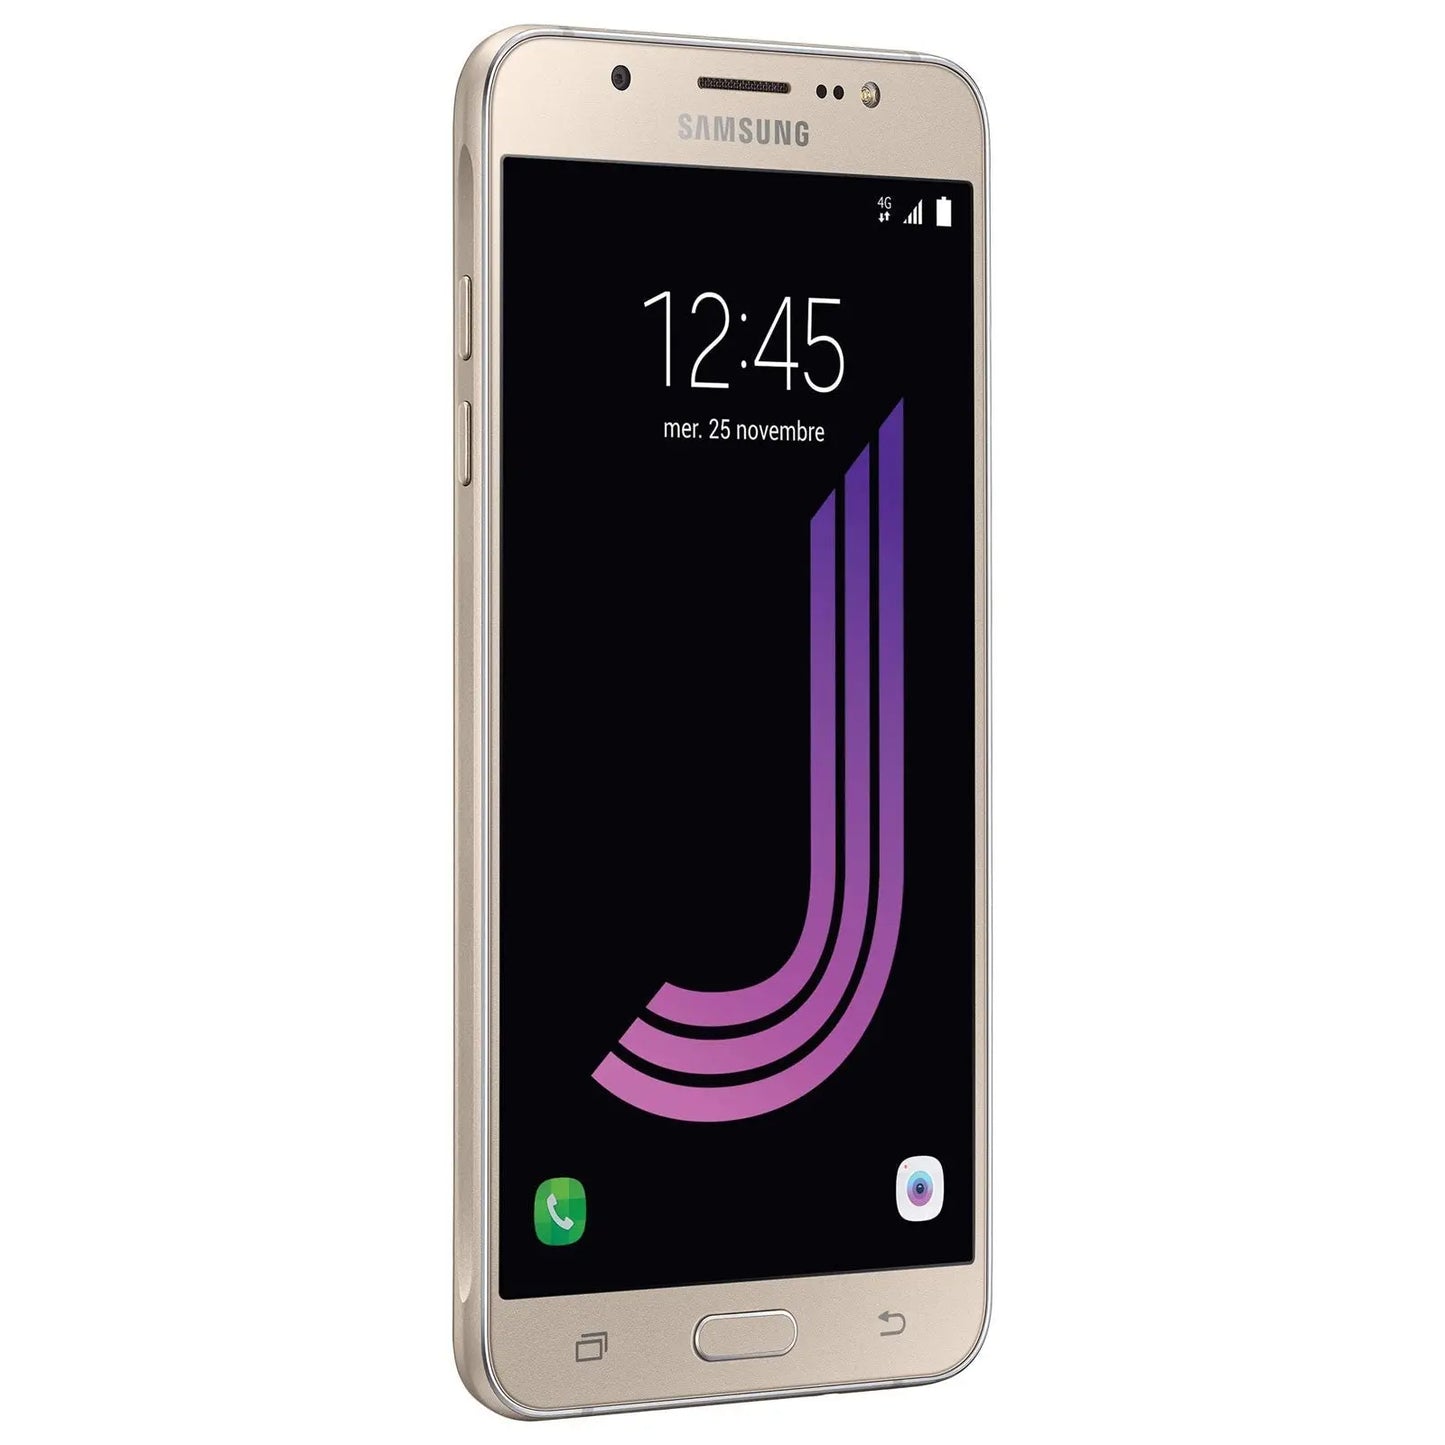 Samsung Galaxy J7 2016 (or) Samsung